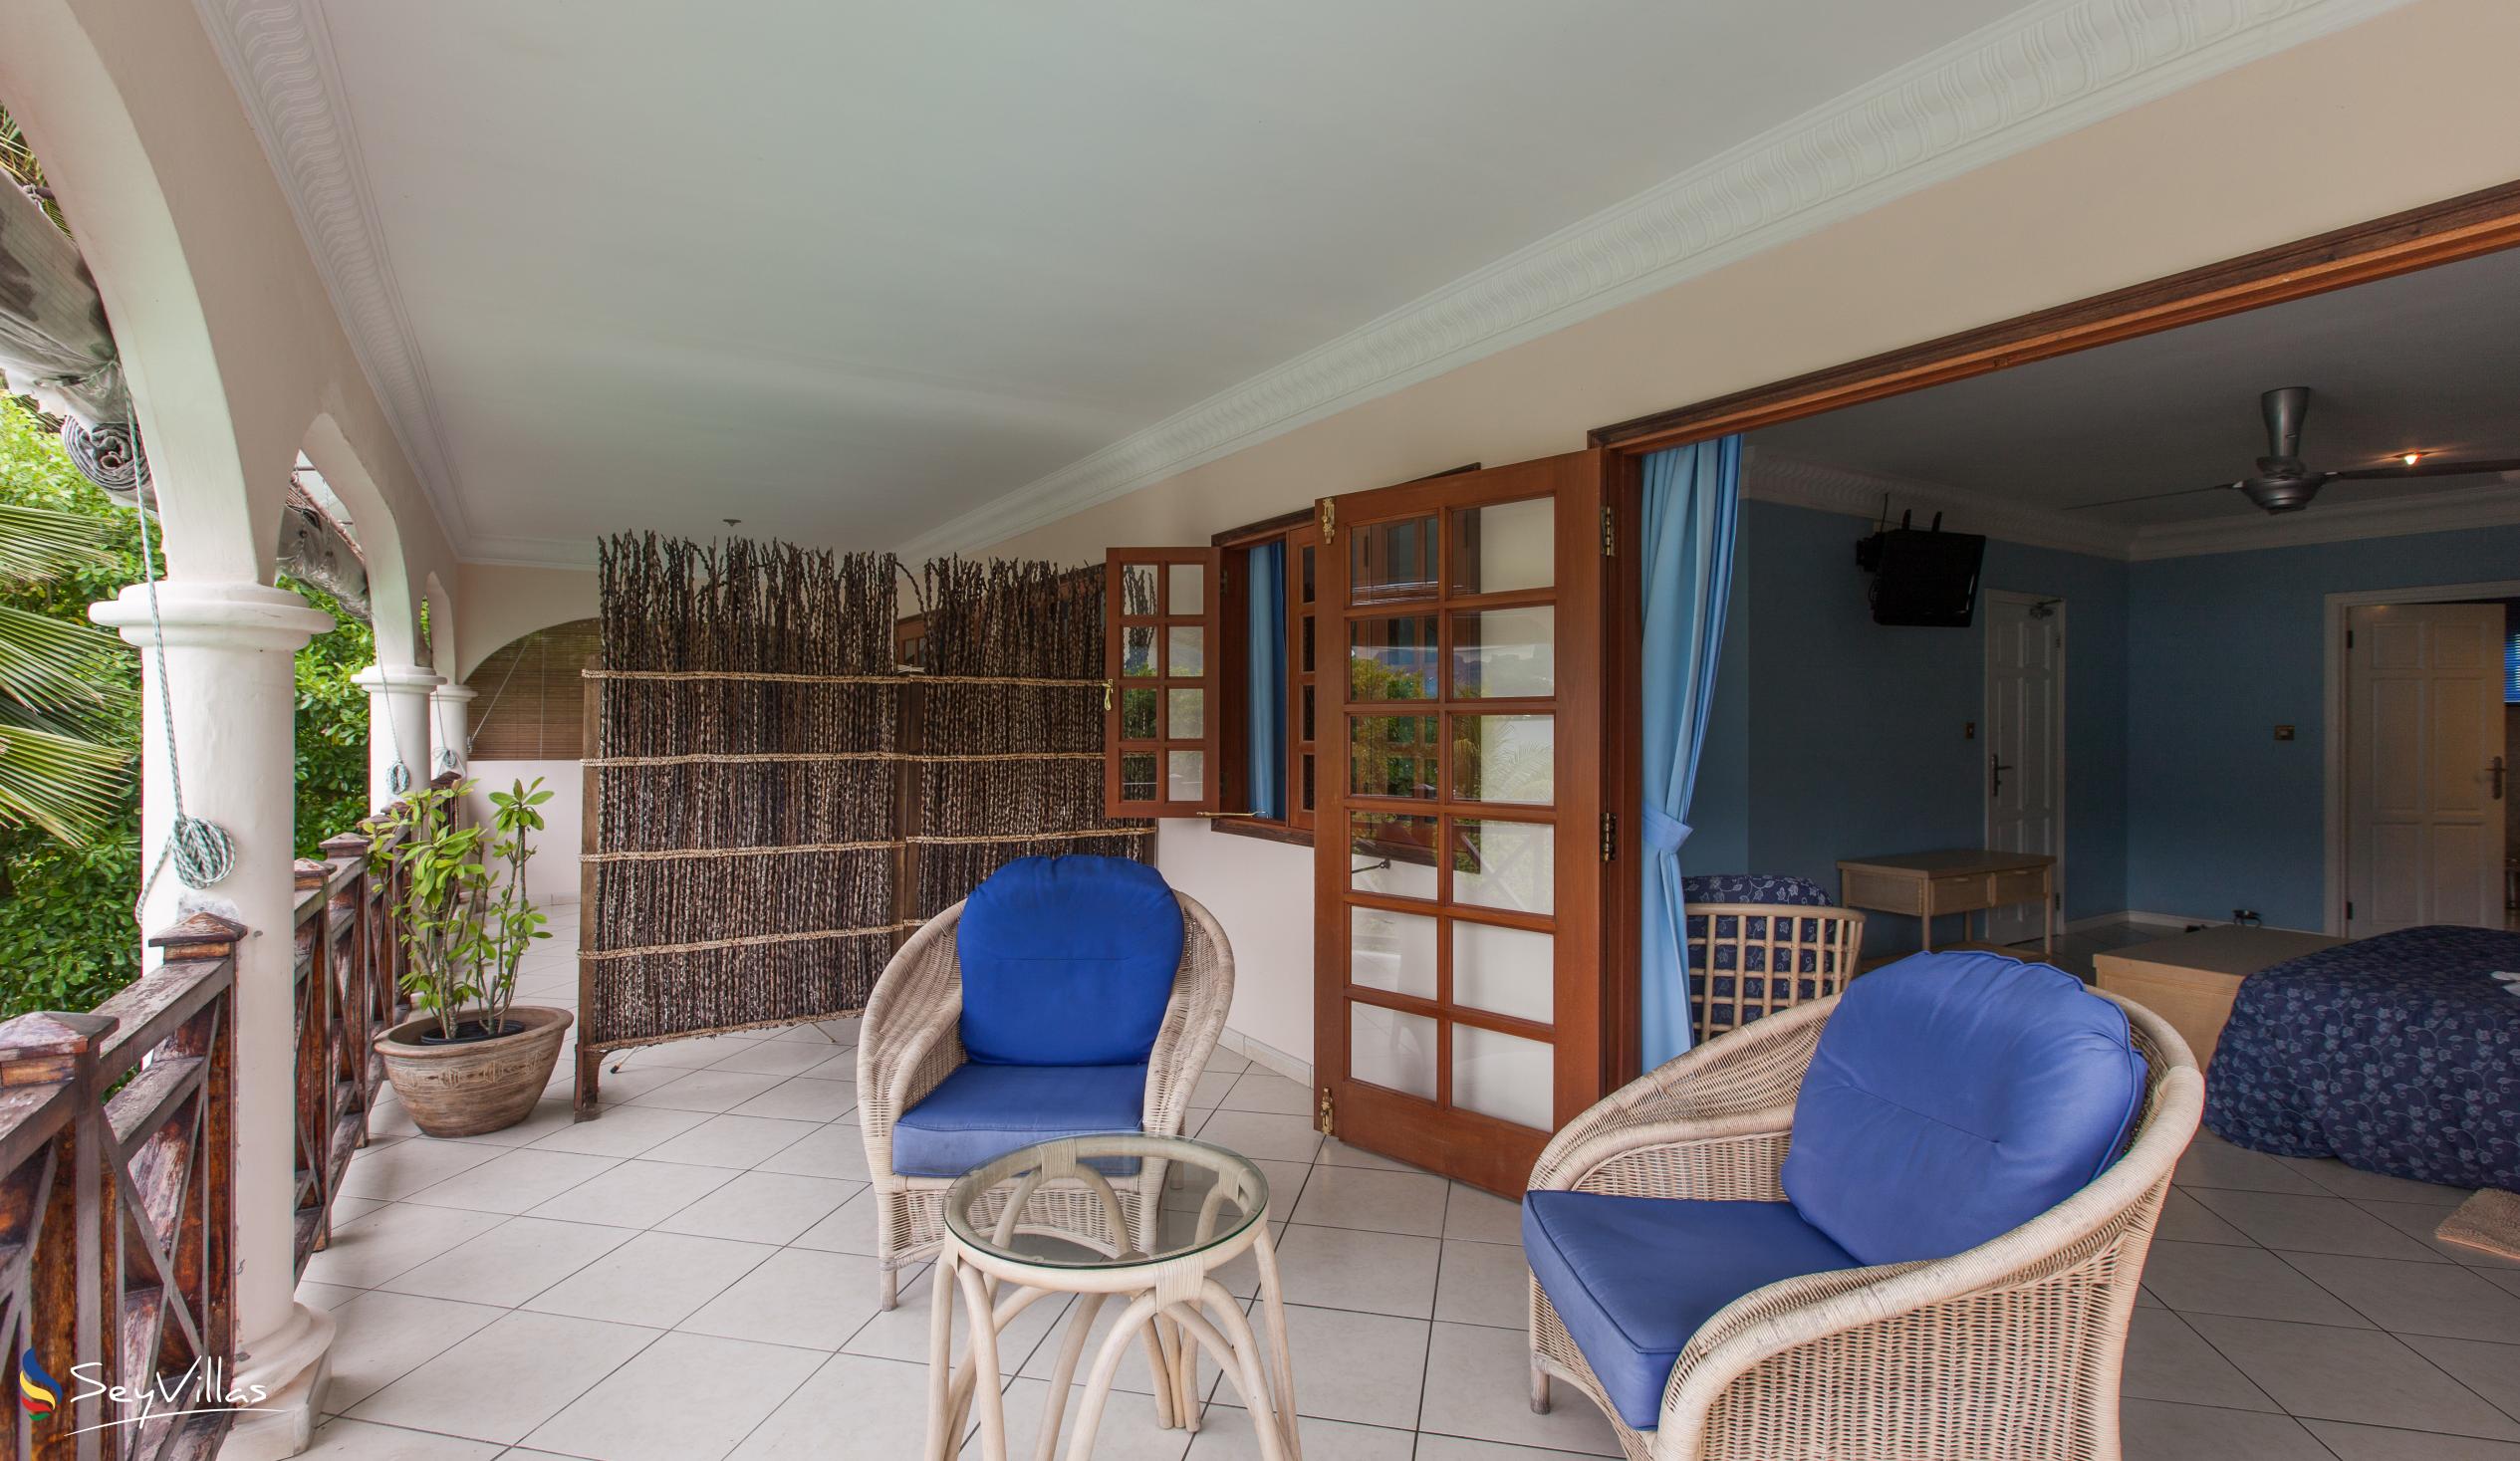 Photo 58: Villa de Cerf - Double Room - Cerf Island (Seychelles)